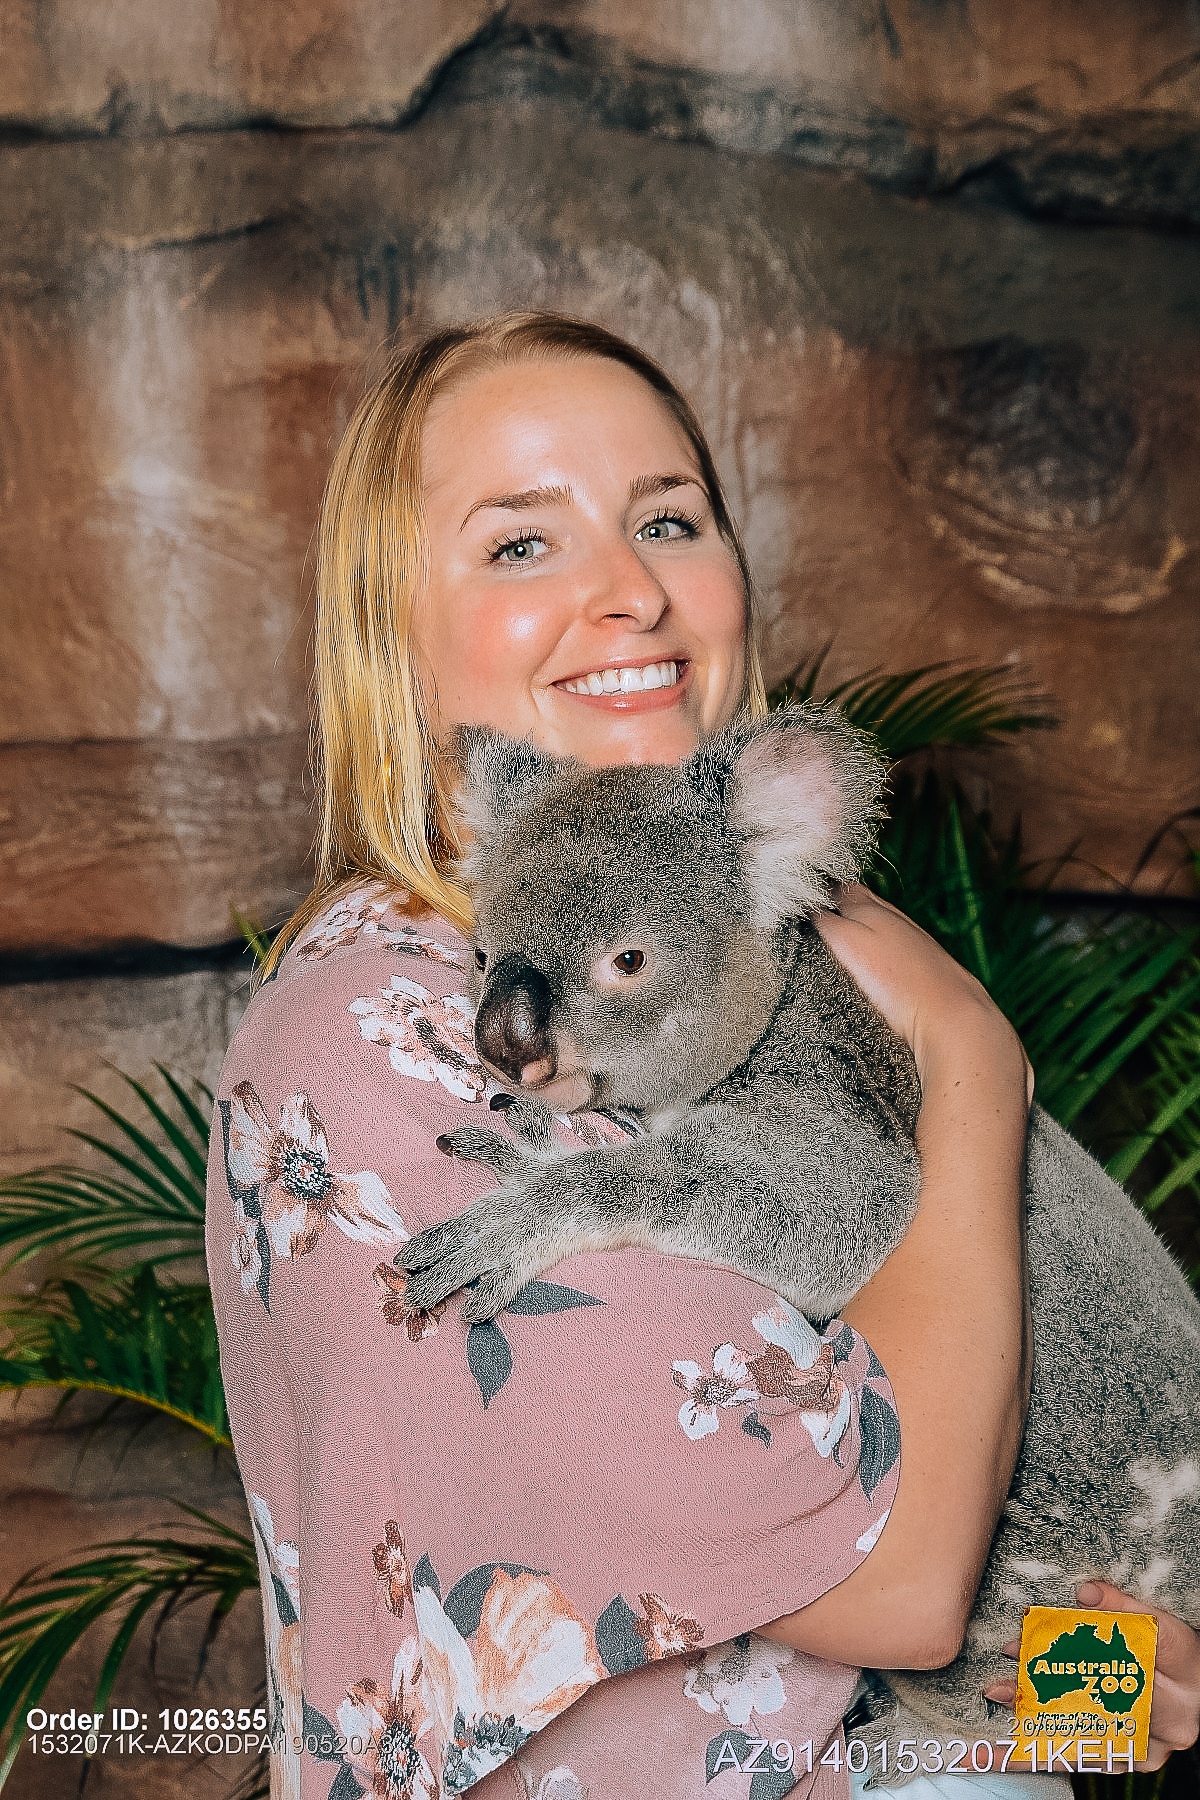 Woman holding a koala at the Australia Zoo